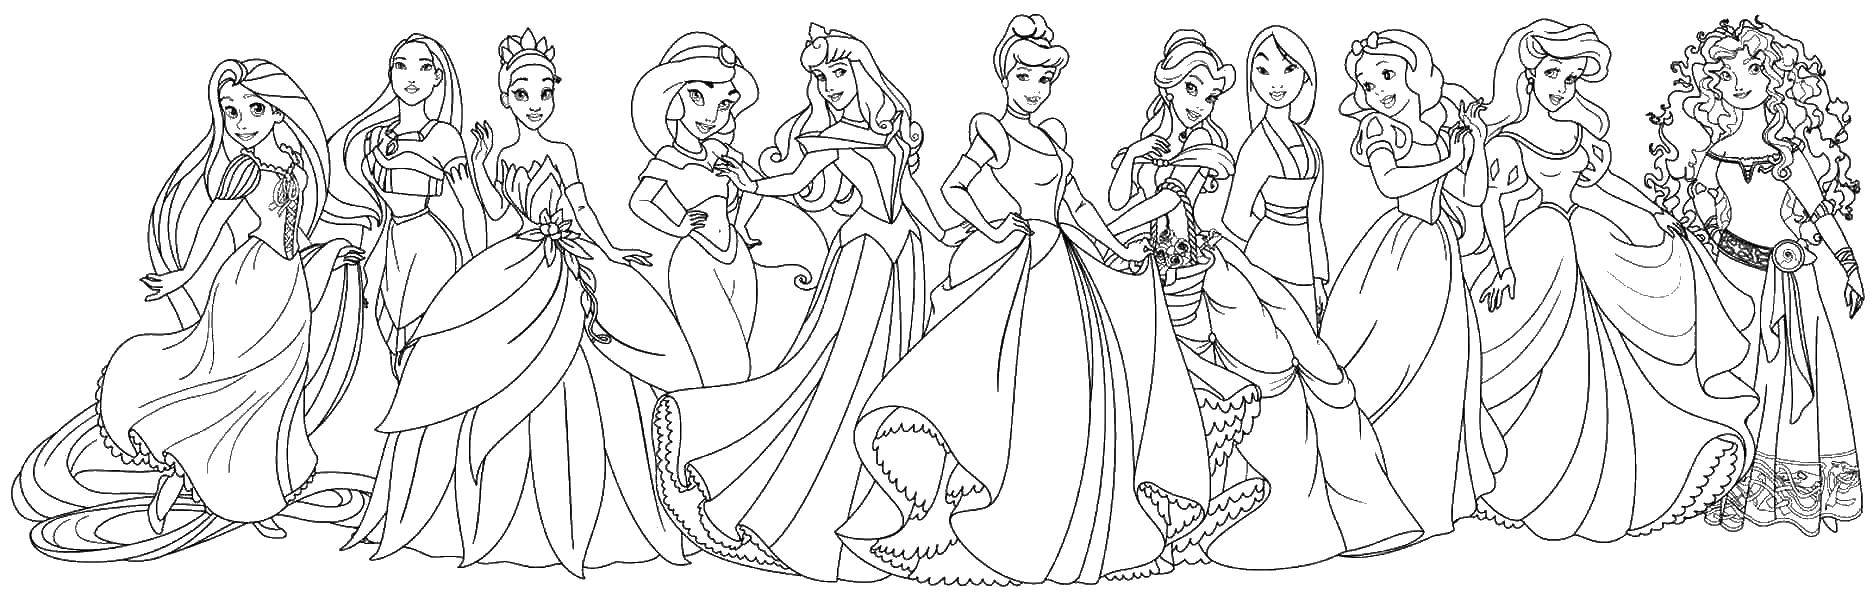 Coloring Different Princess. Category Princess. Tags:  princesses, cartoons, fairy tales.